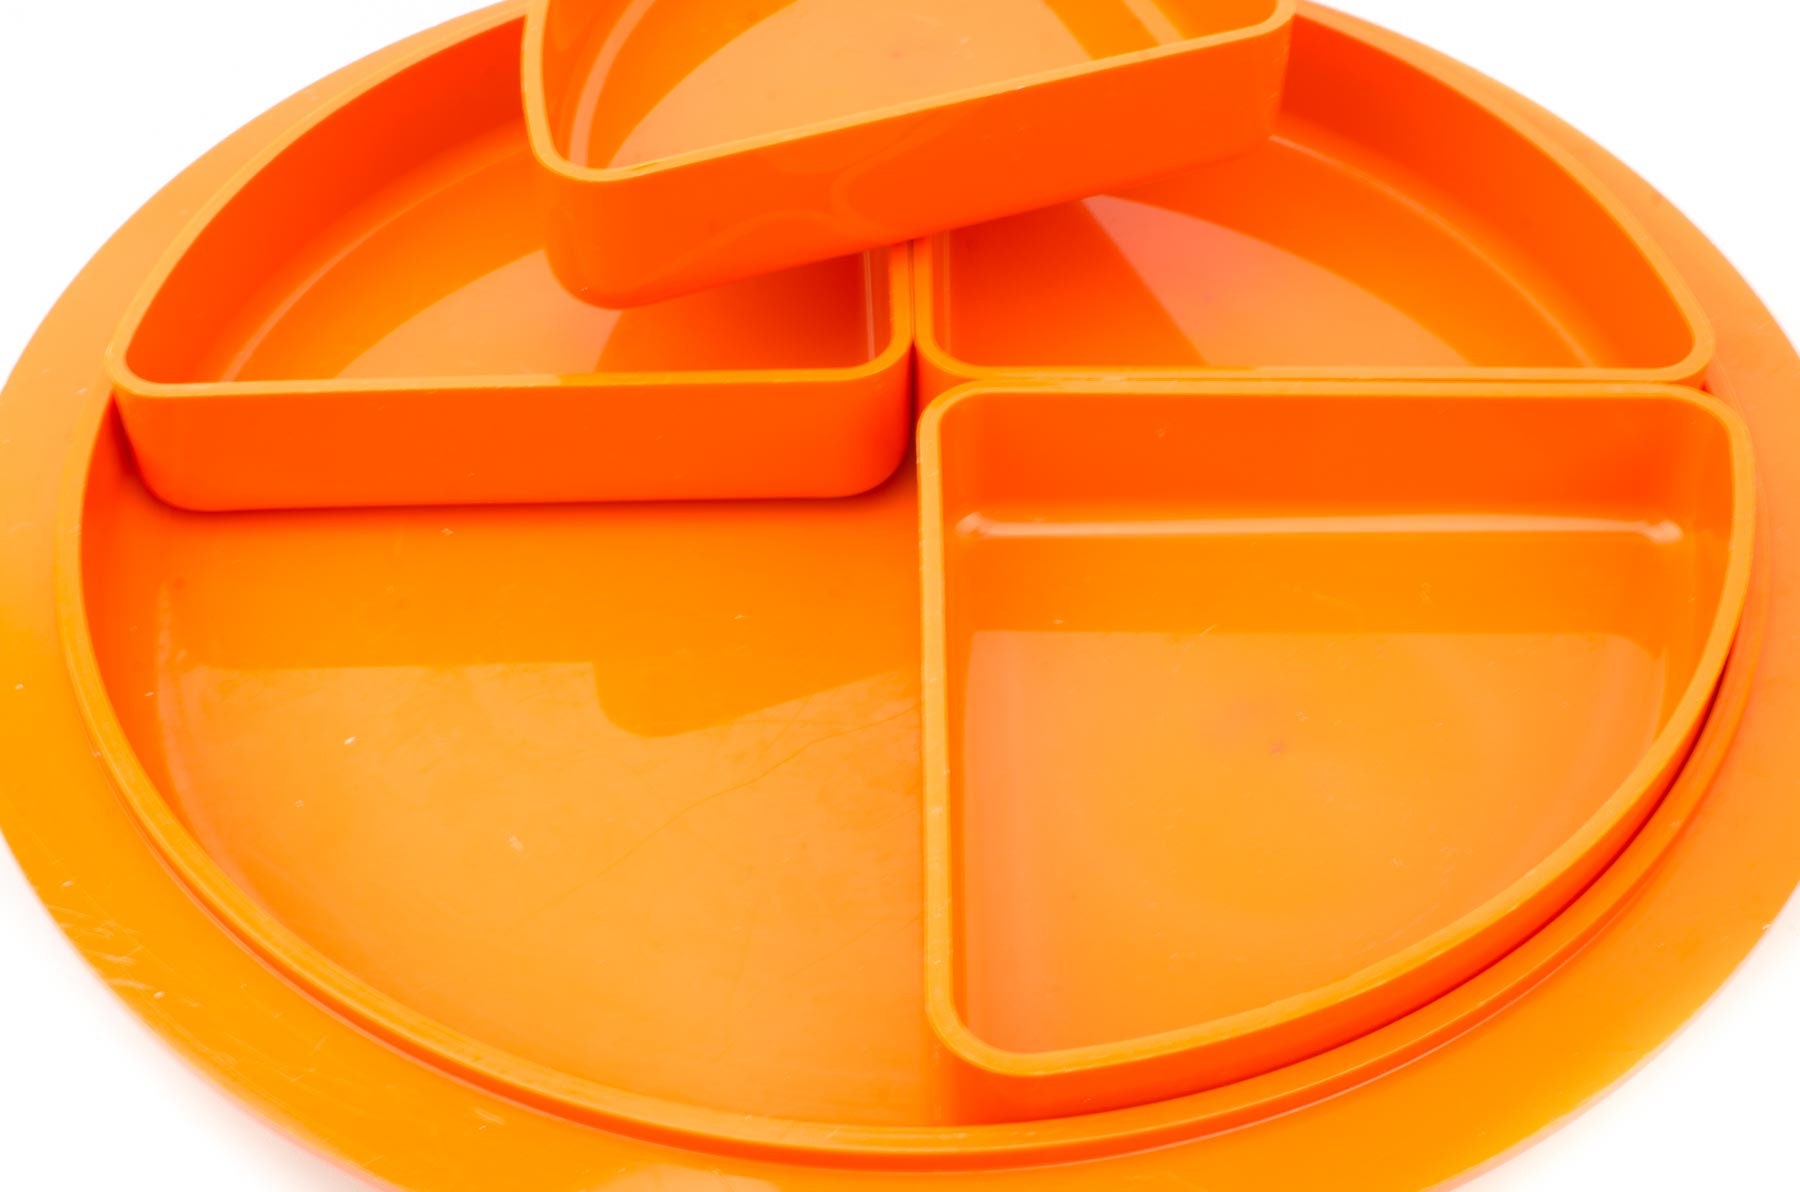 Orange Party Platter Collection IPL Acrylic Party Tray Andre Morin Orange Tray Modular Tray